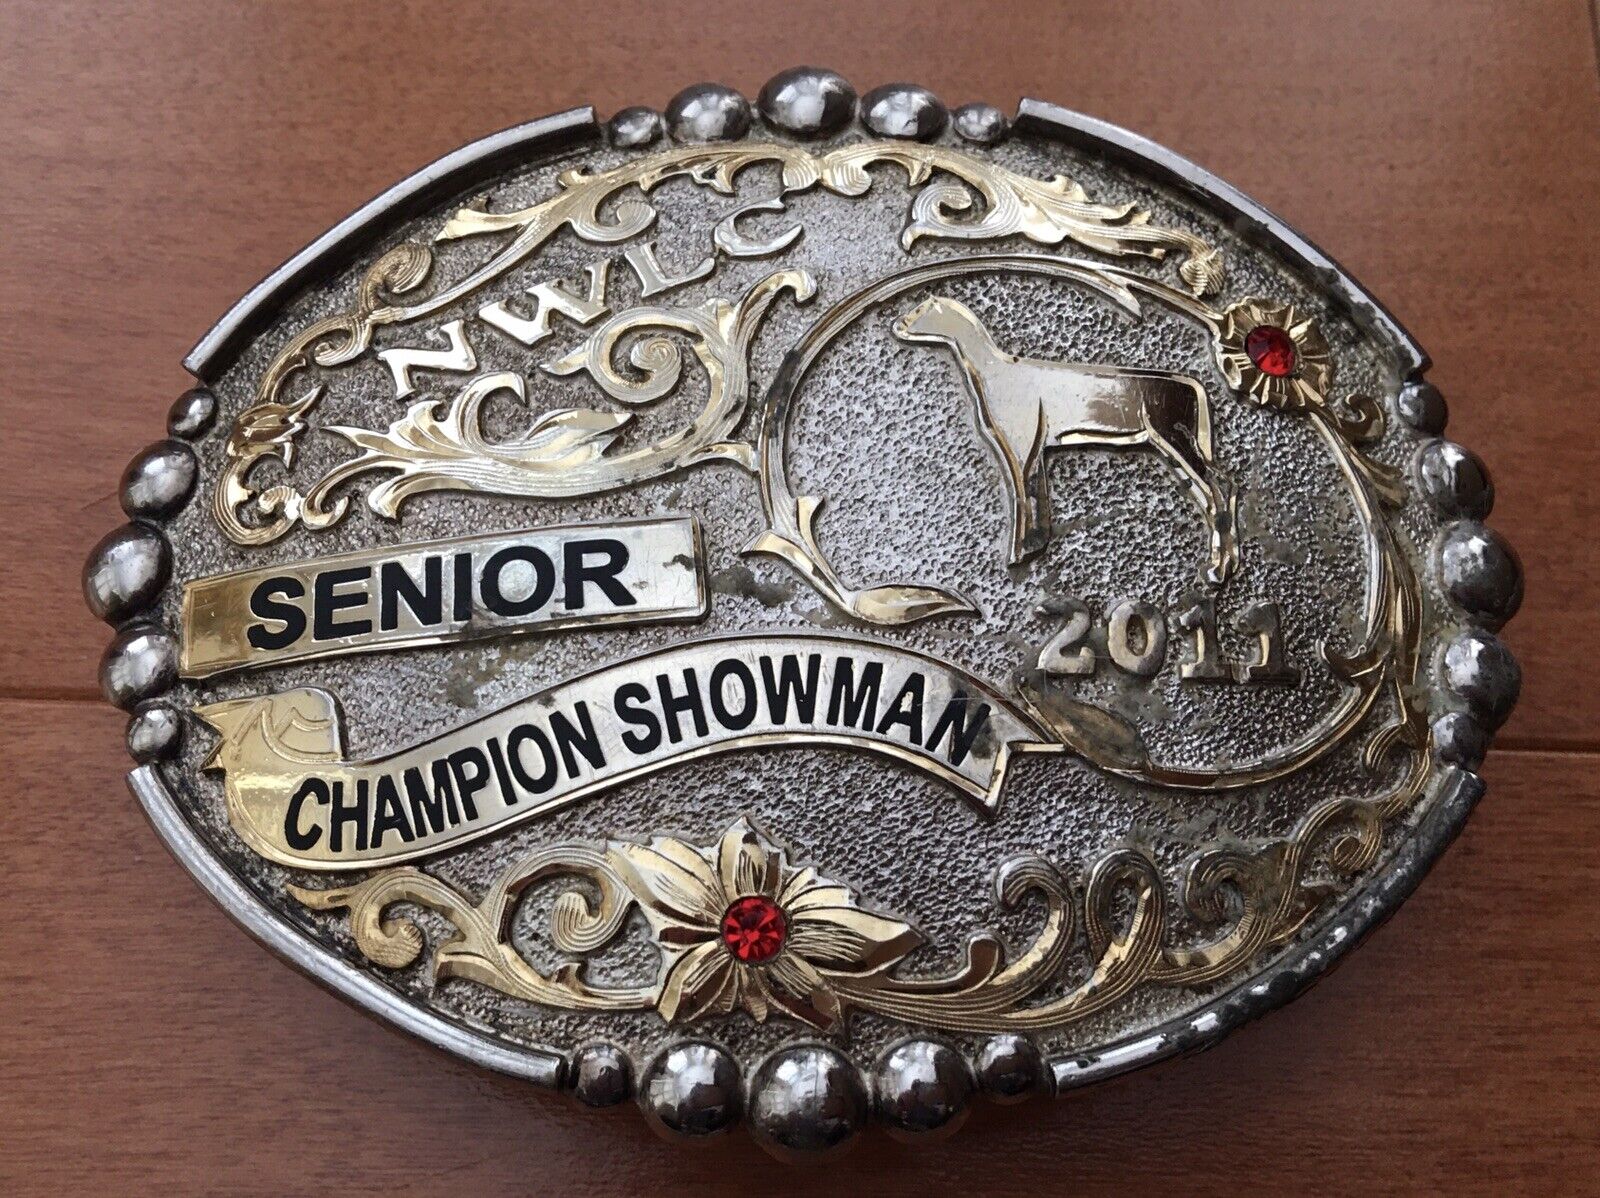 Vintage 2011 NWLC Senior Champion Showman Showtime Awards Trophy Belt Buckle